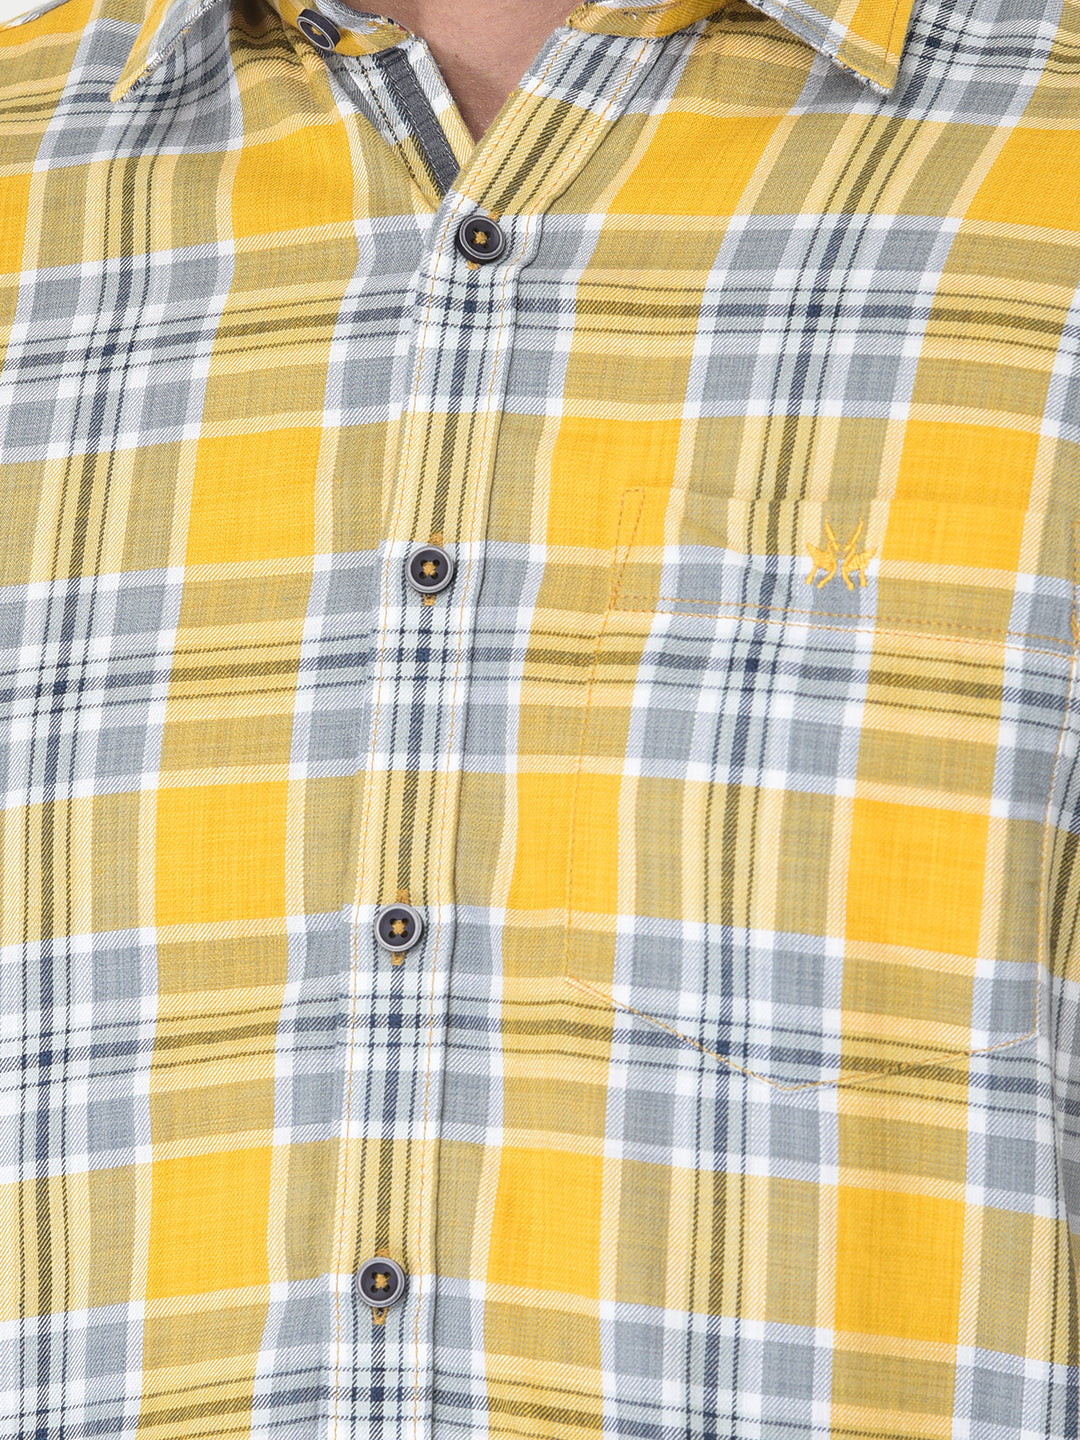 Yellow Tartan Checked Shirt - Men Shirts